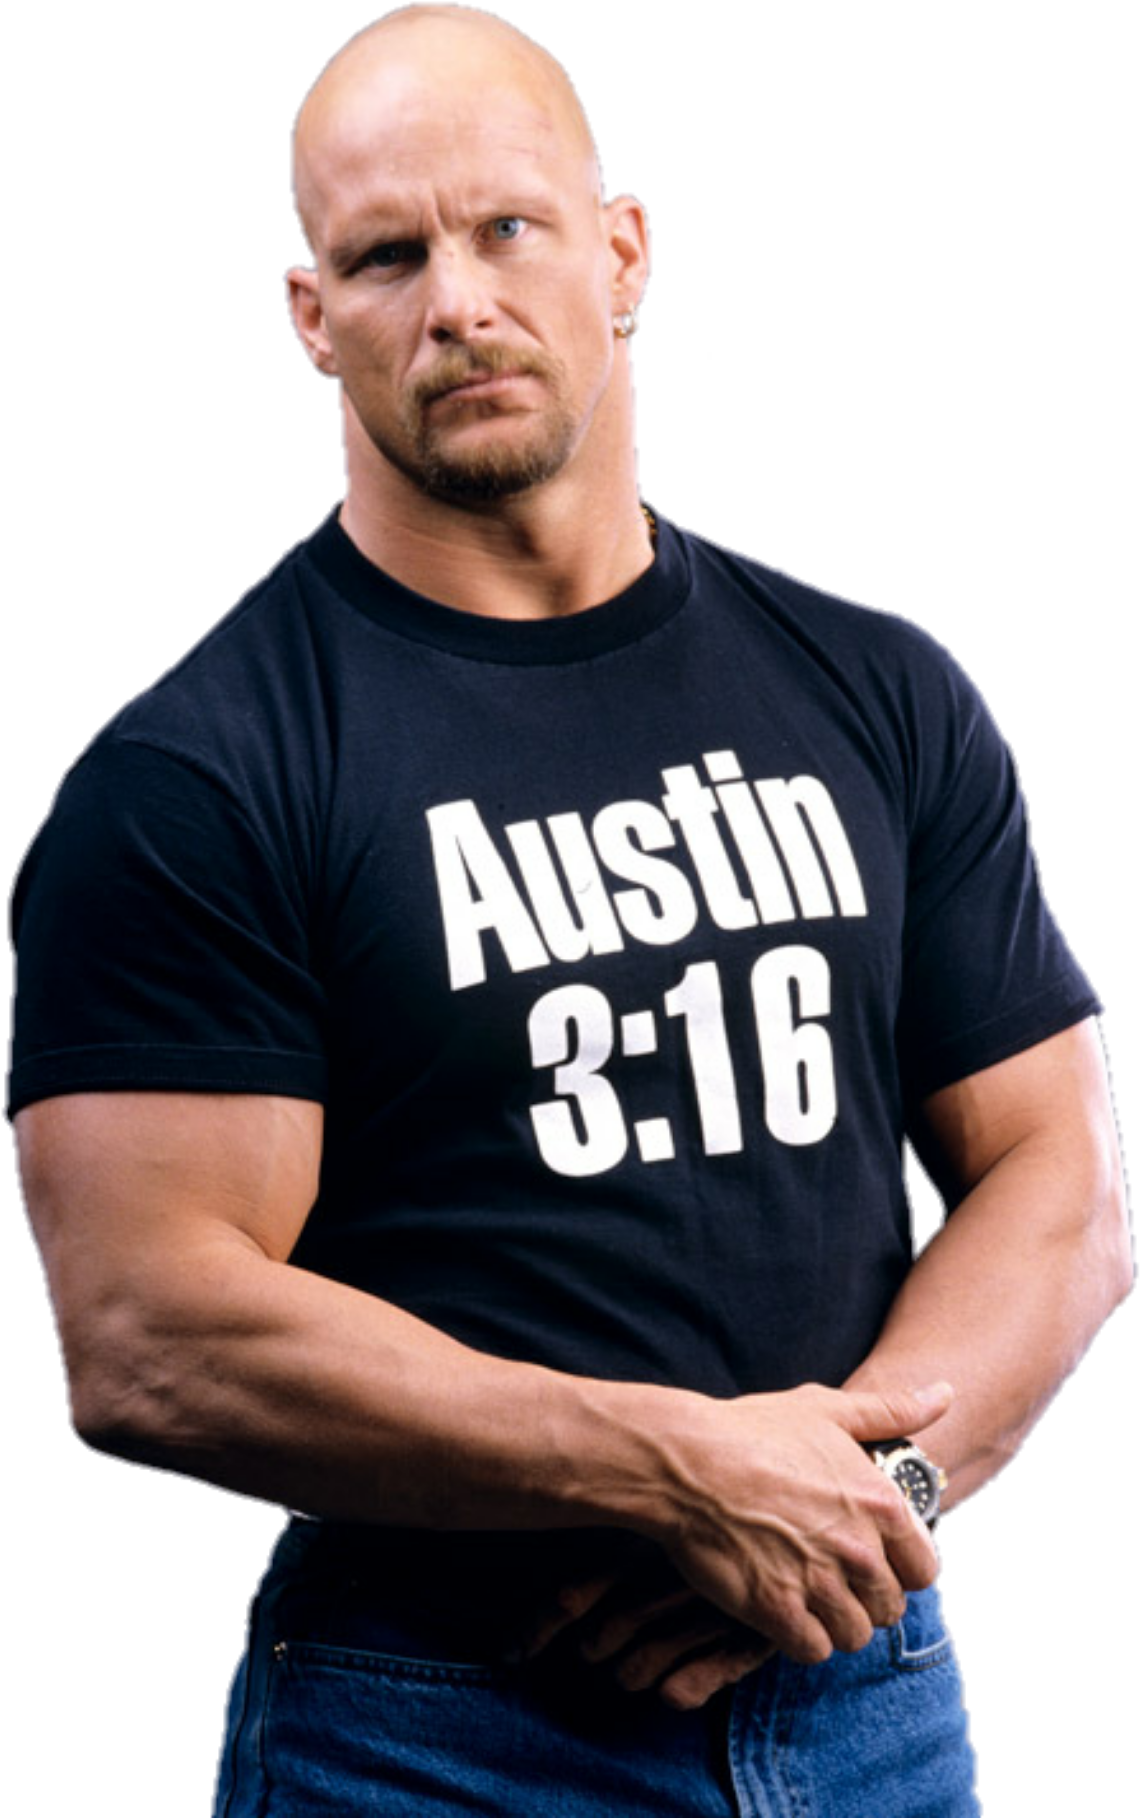 Iconic Wrestler Austin316 Shirt PNG